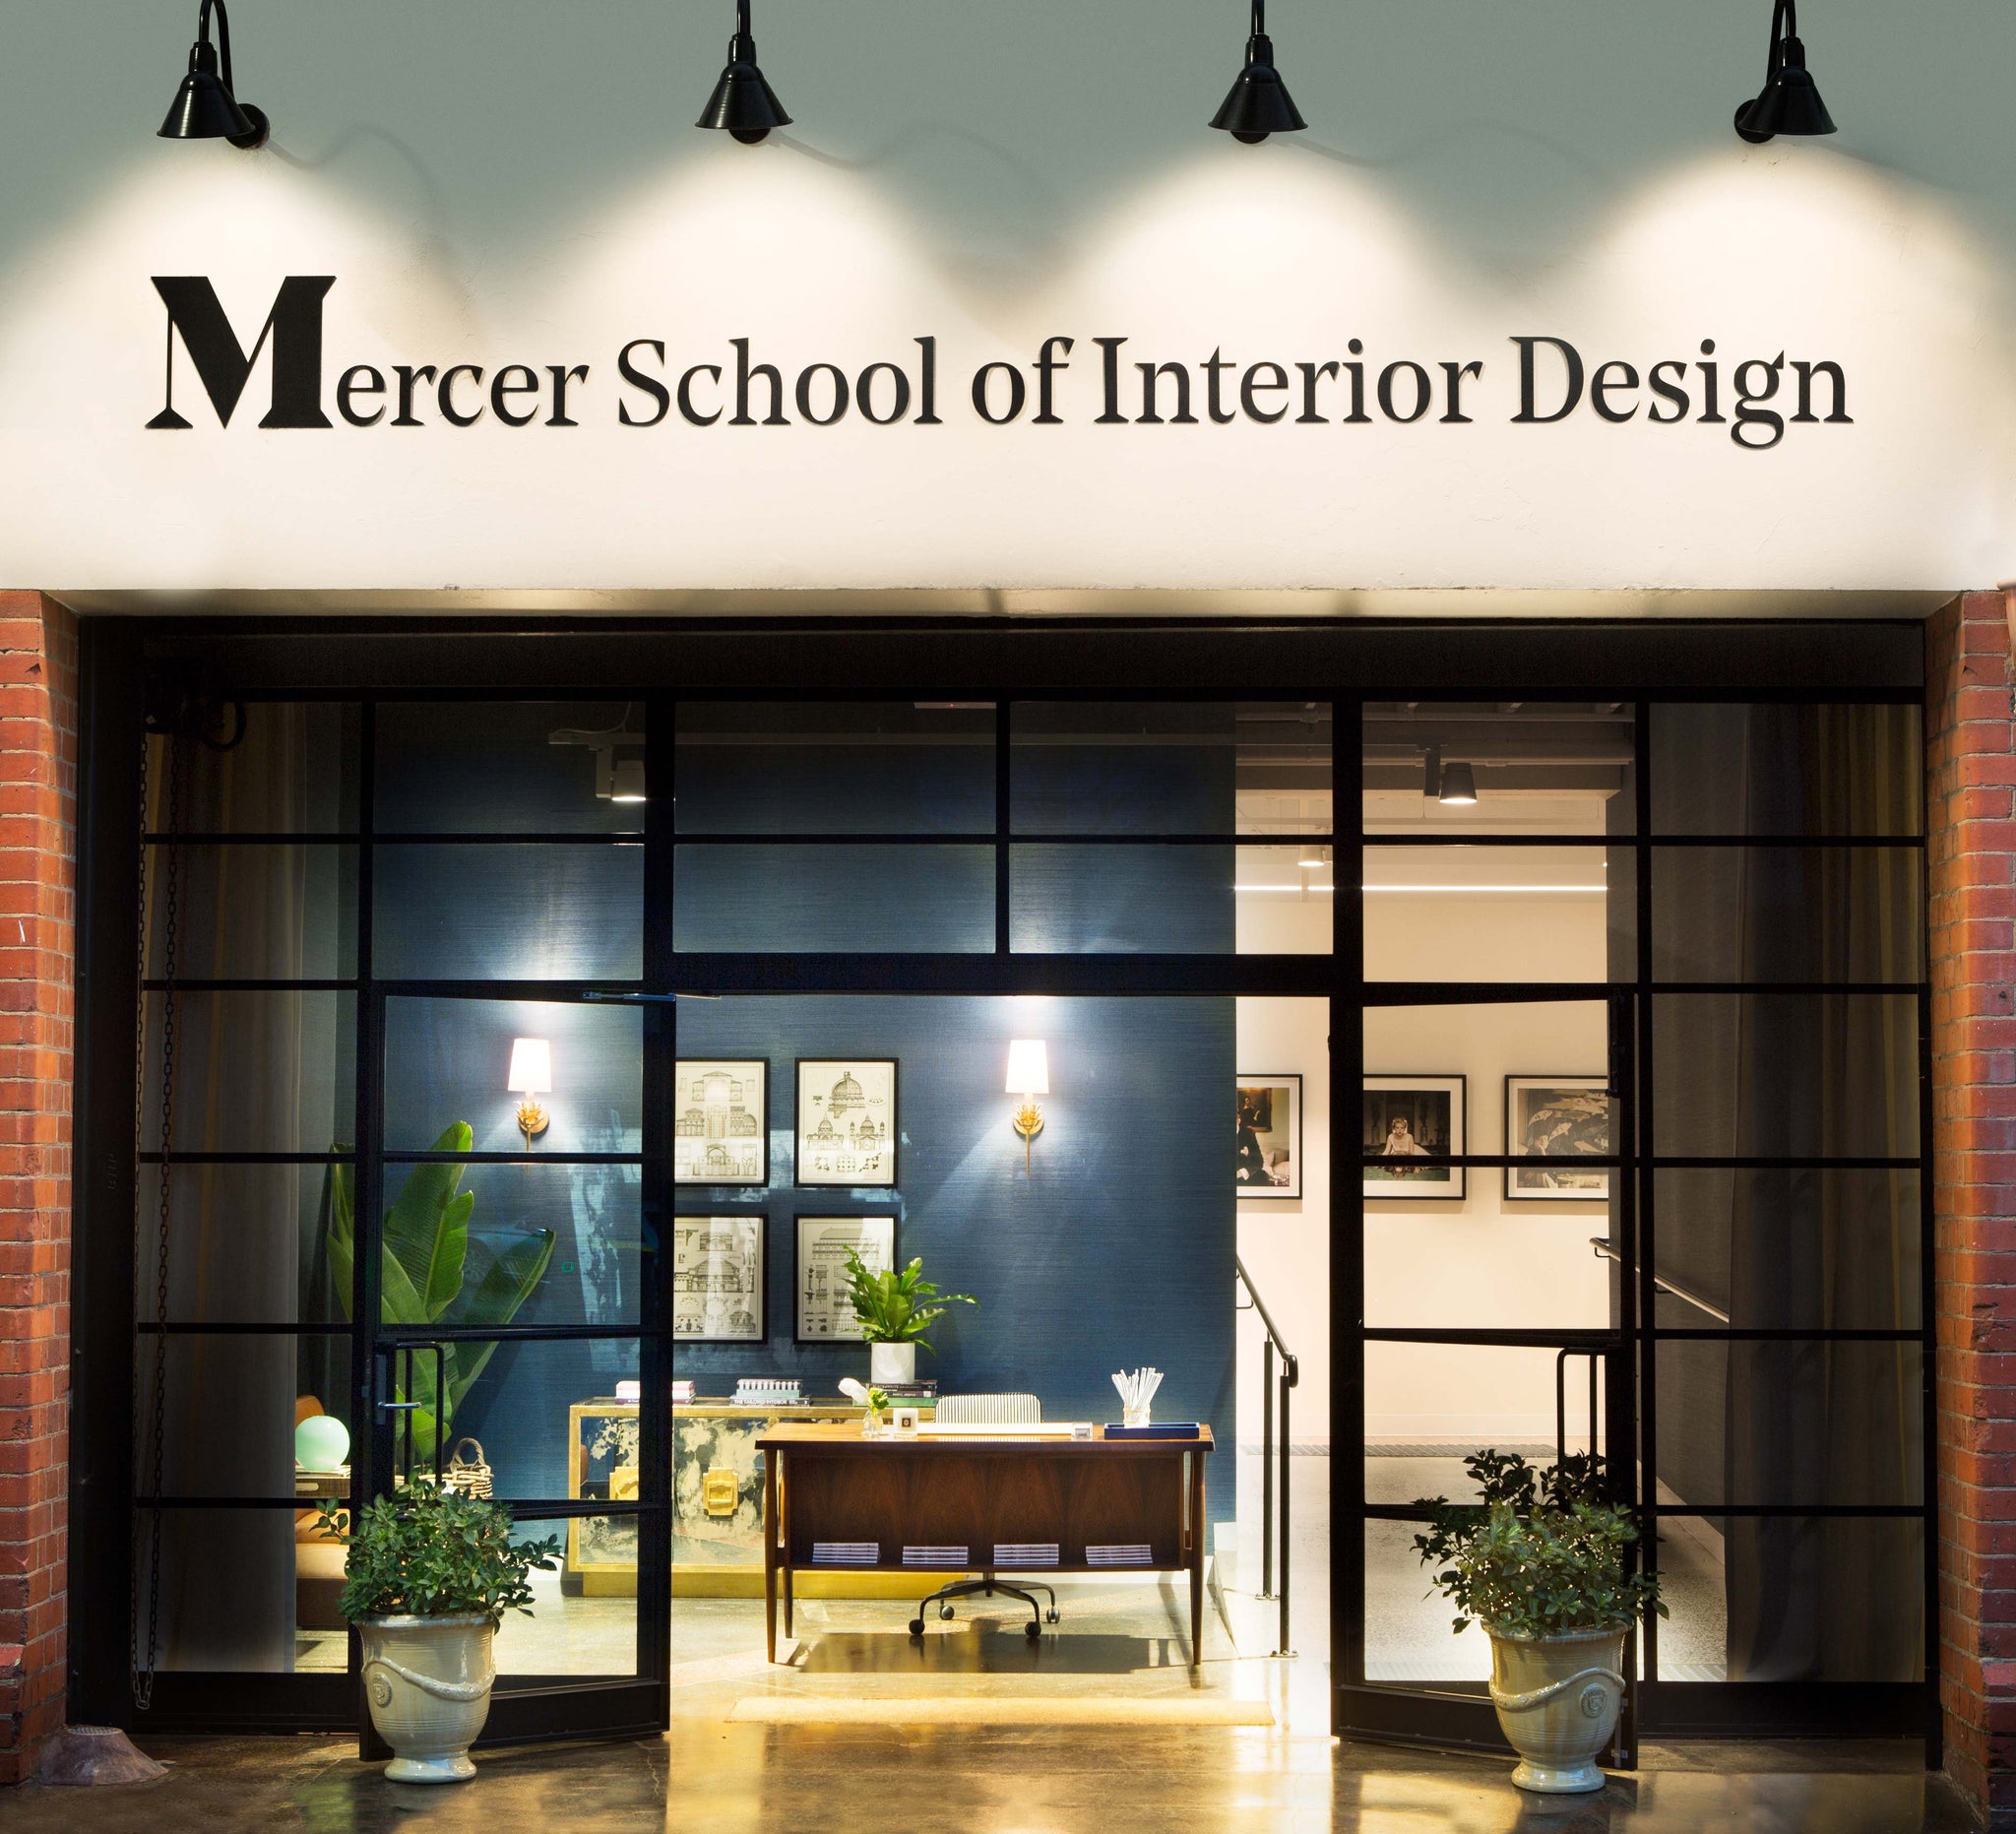 Entrance to Mercer School of Interior Design